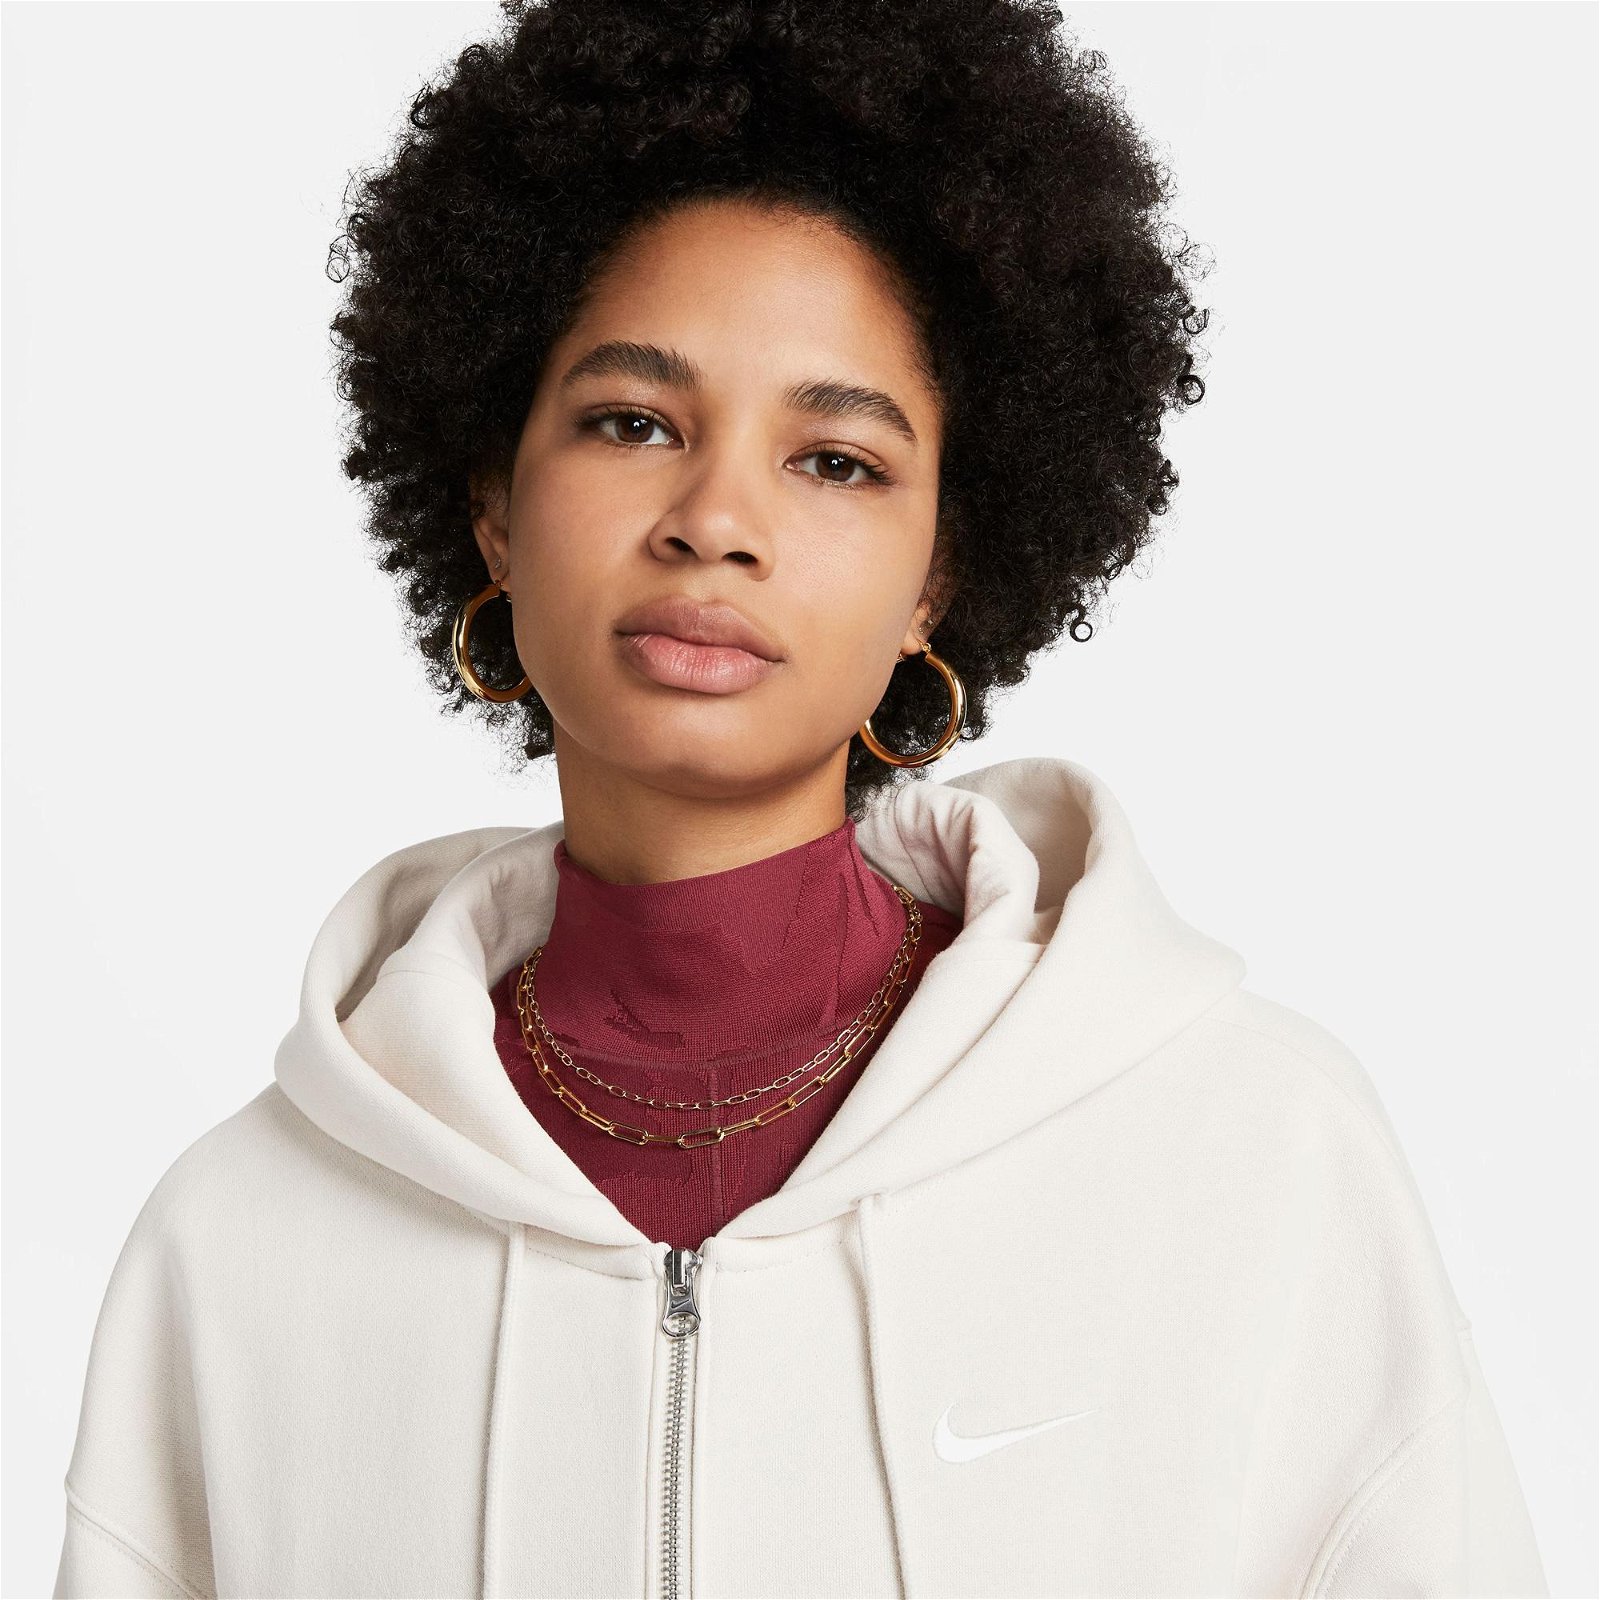 Nike Sportswear Phoenix Fleece Oversize Hoodie Full Zip Kadın Krem Rengi Sweatshirt